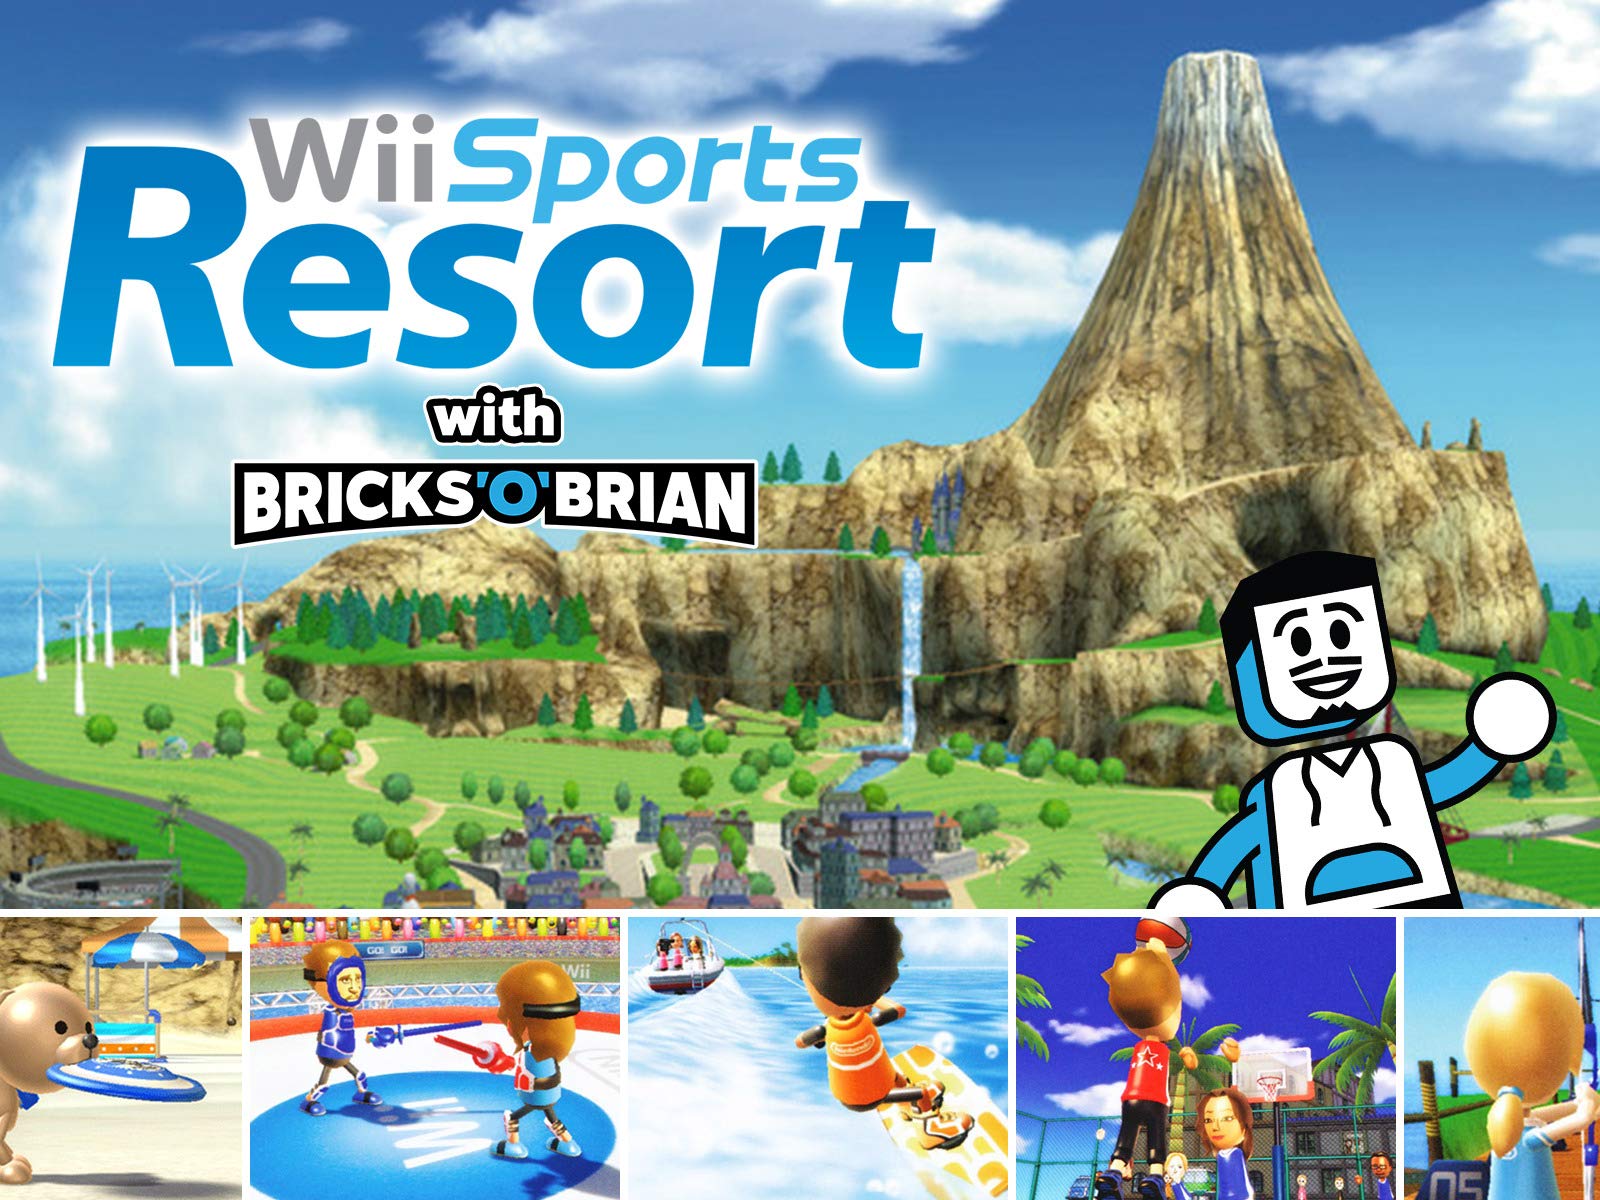 Watch Clip: Wii Sports Resort with Bricks 'O' Brian!